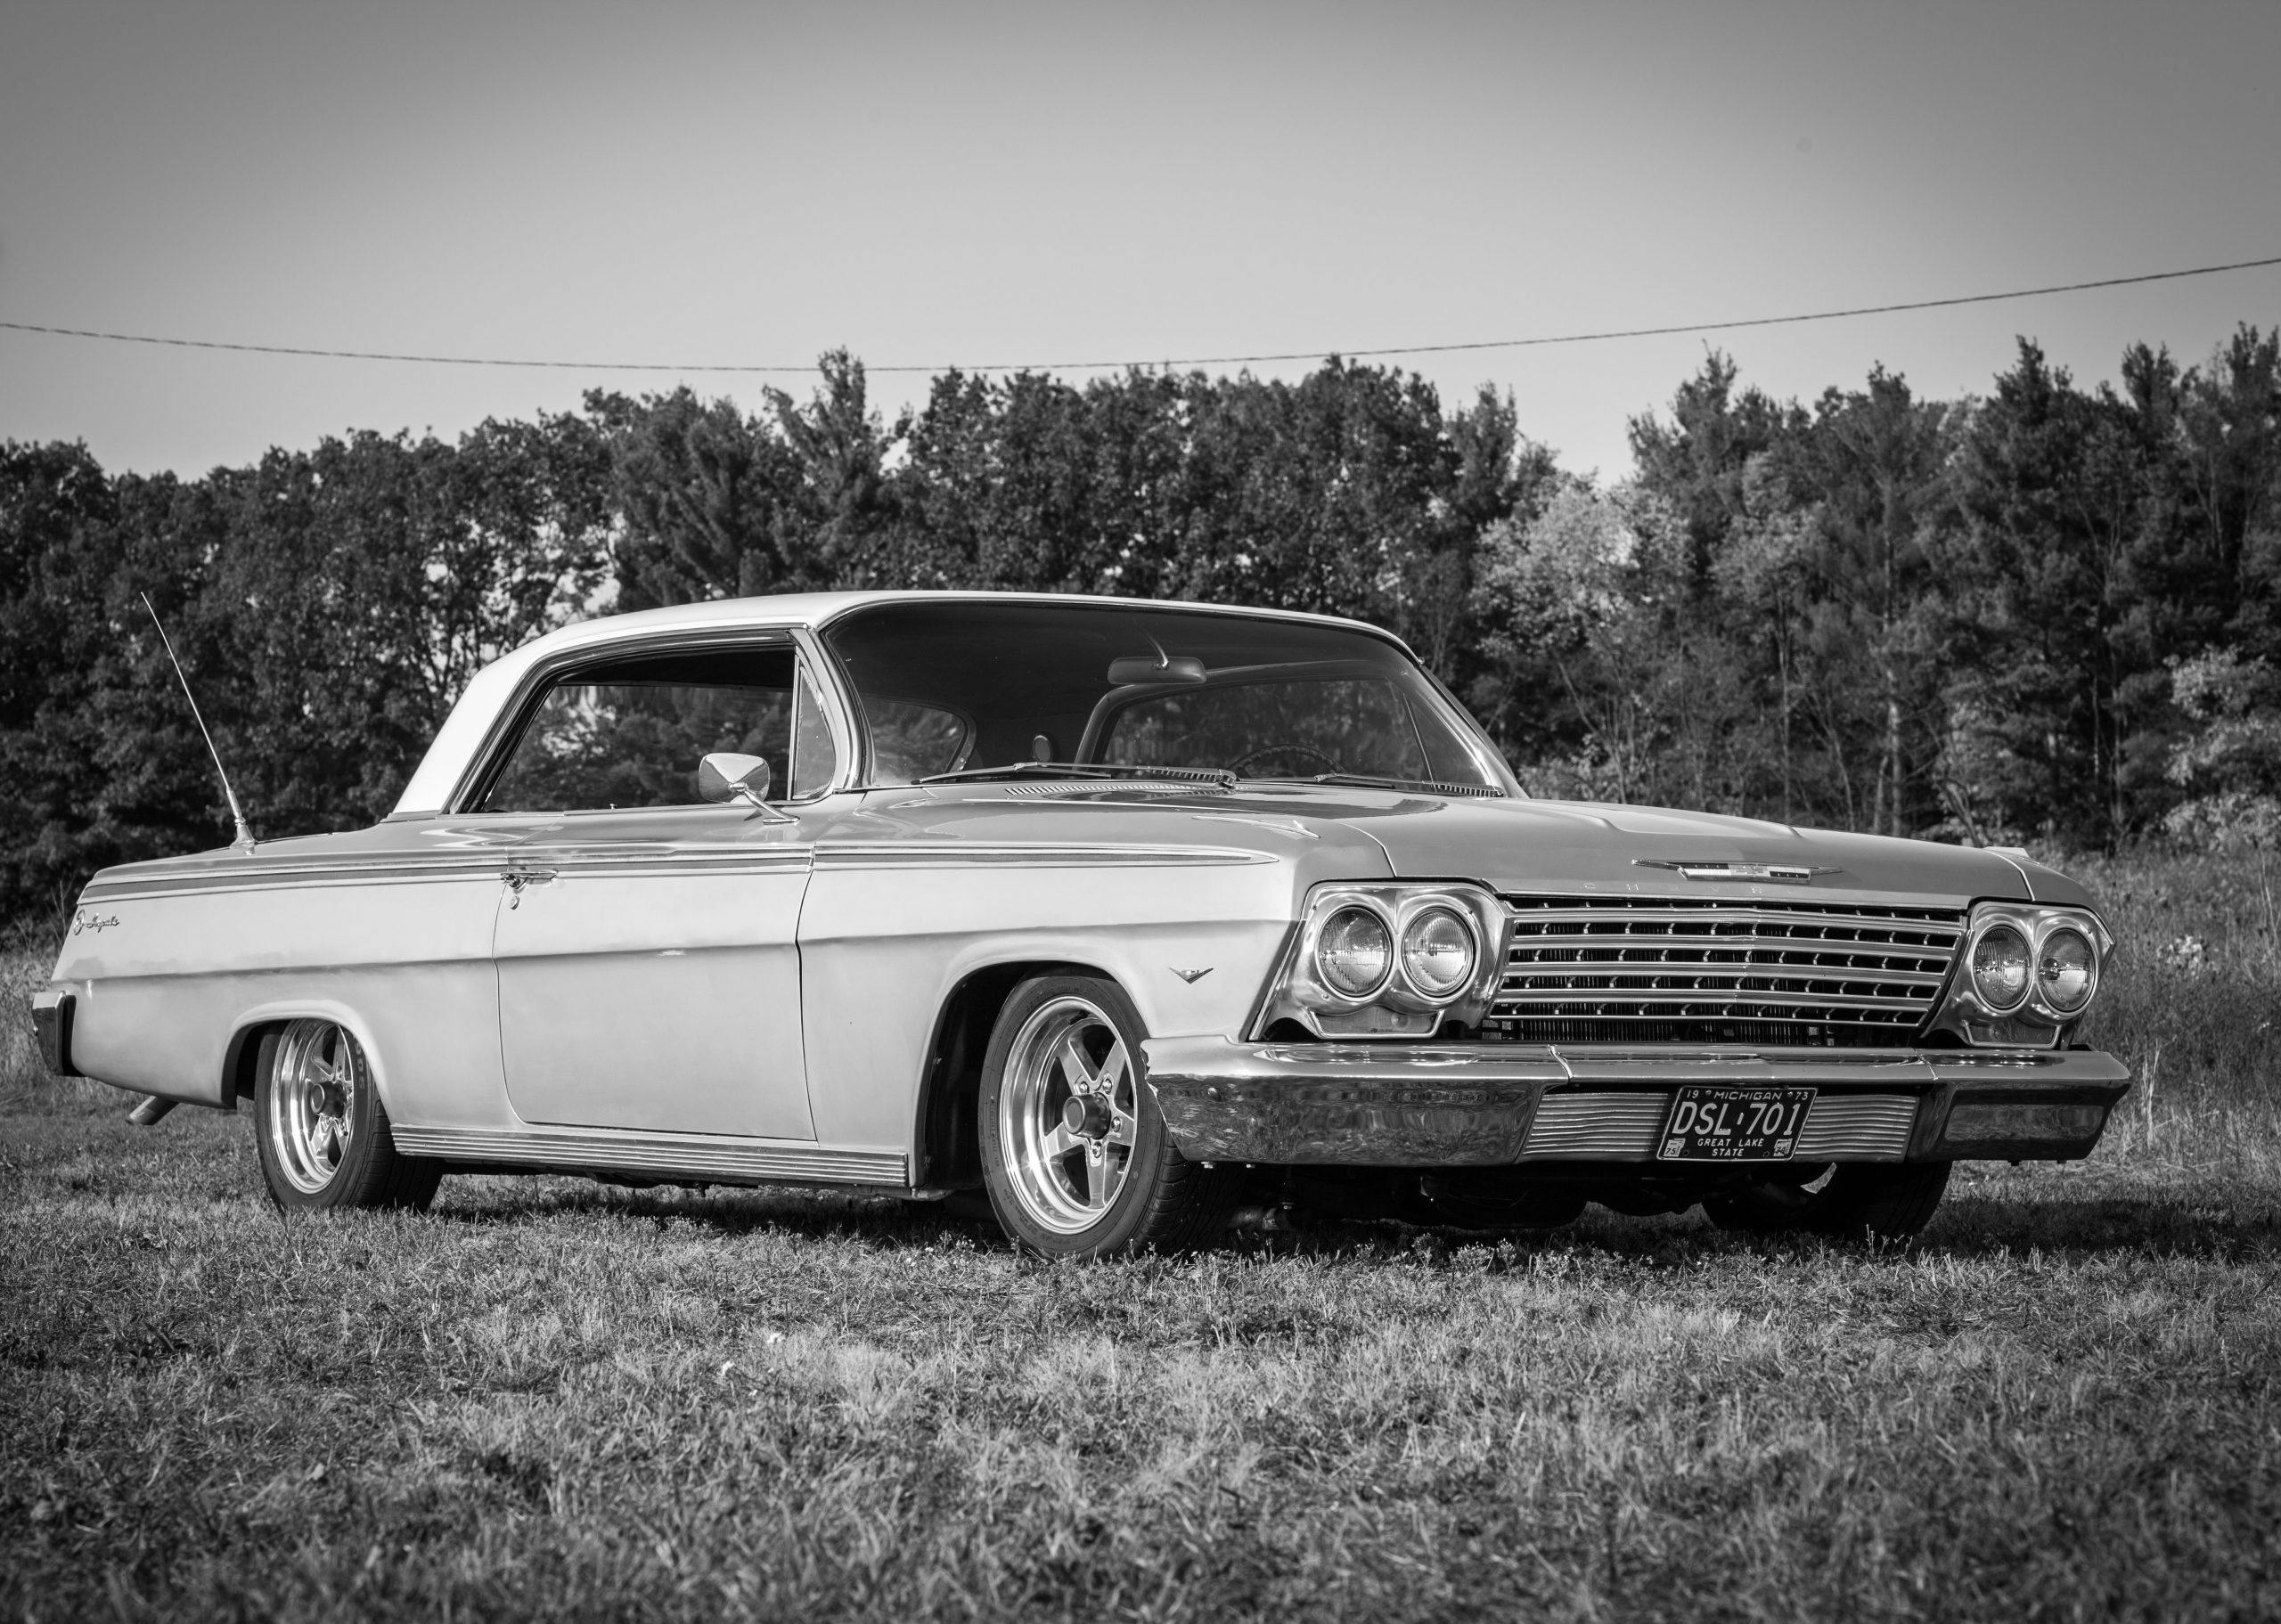 Jason Prince - 1962 Chevrolet Impala - black and white low